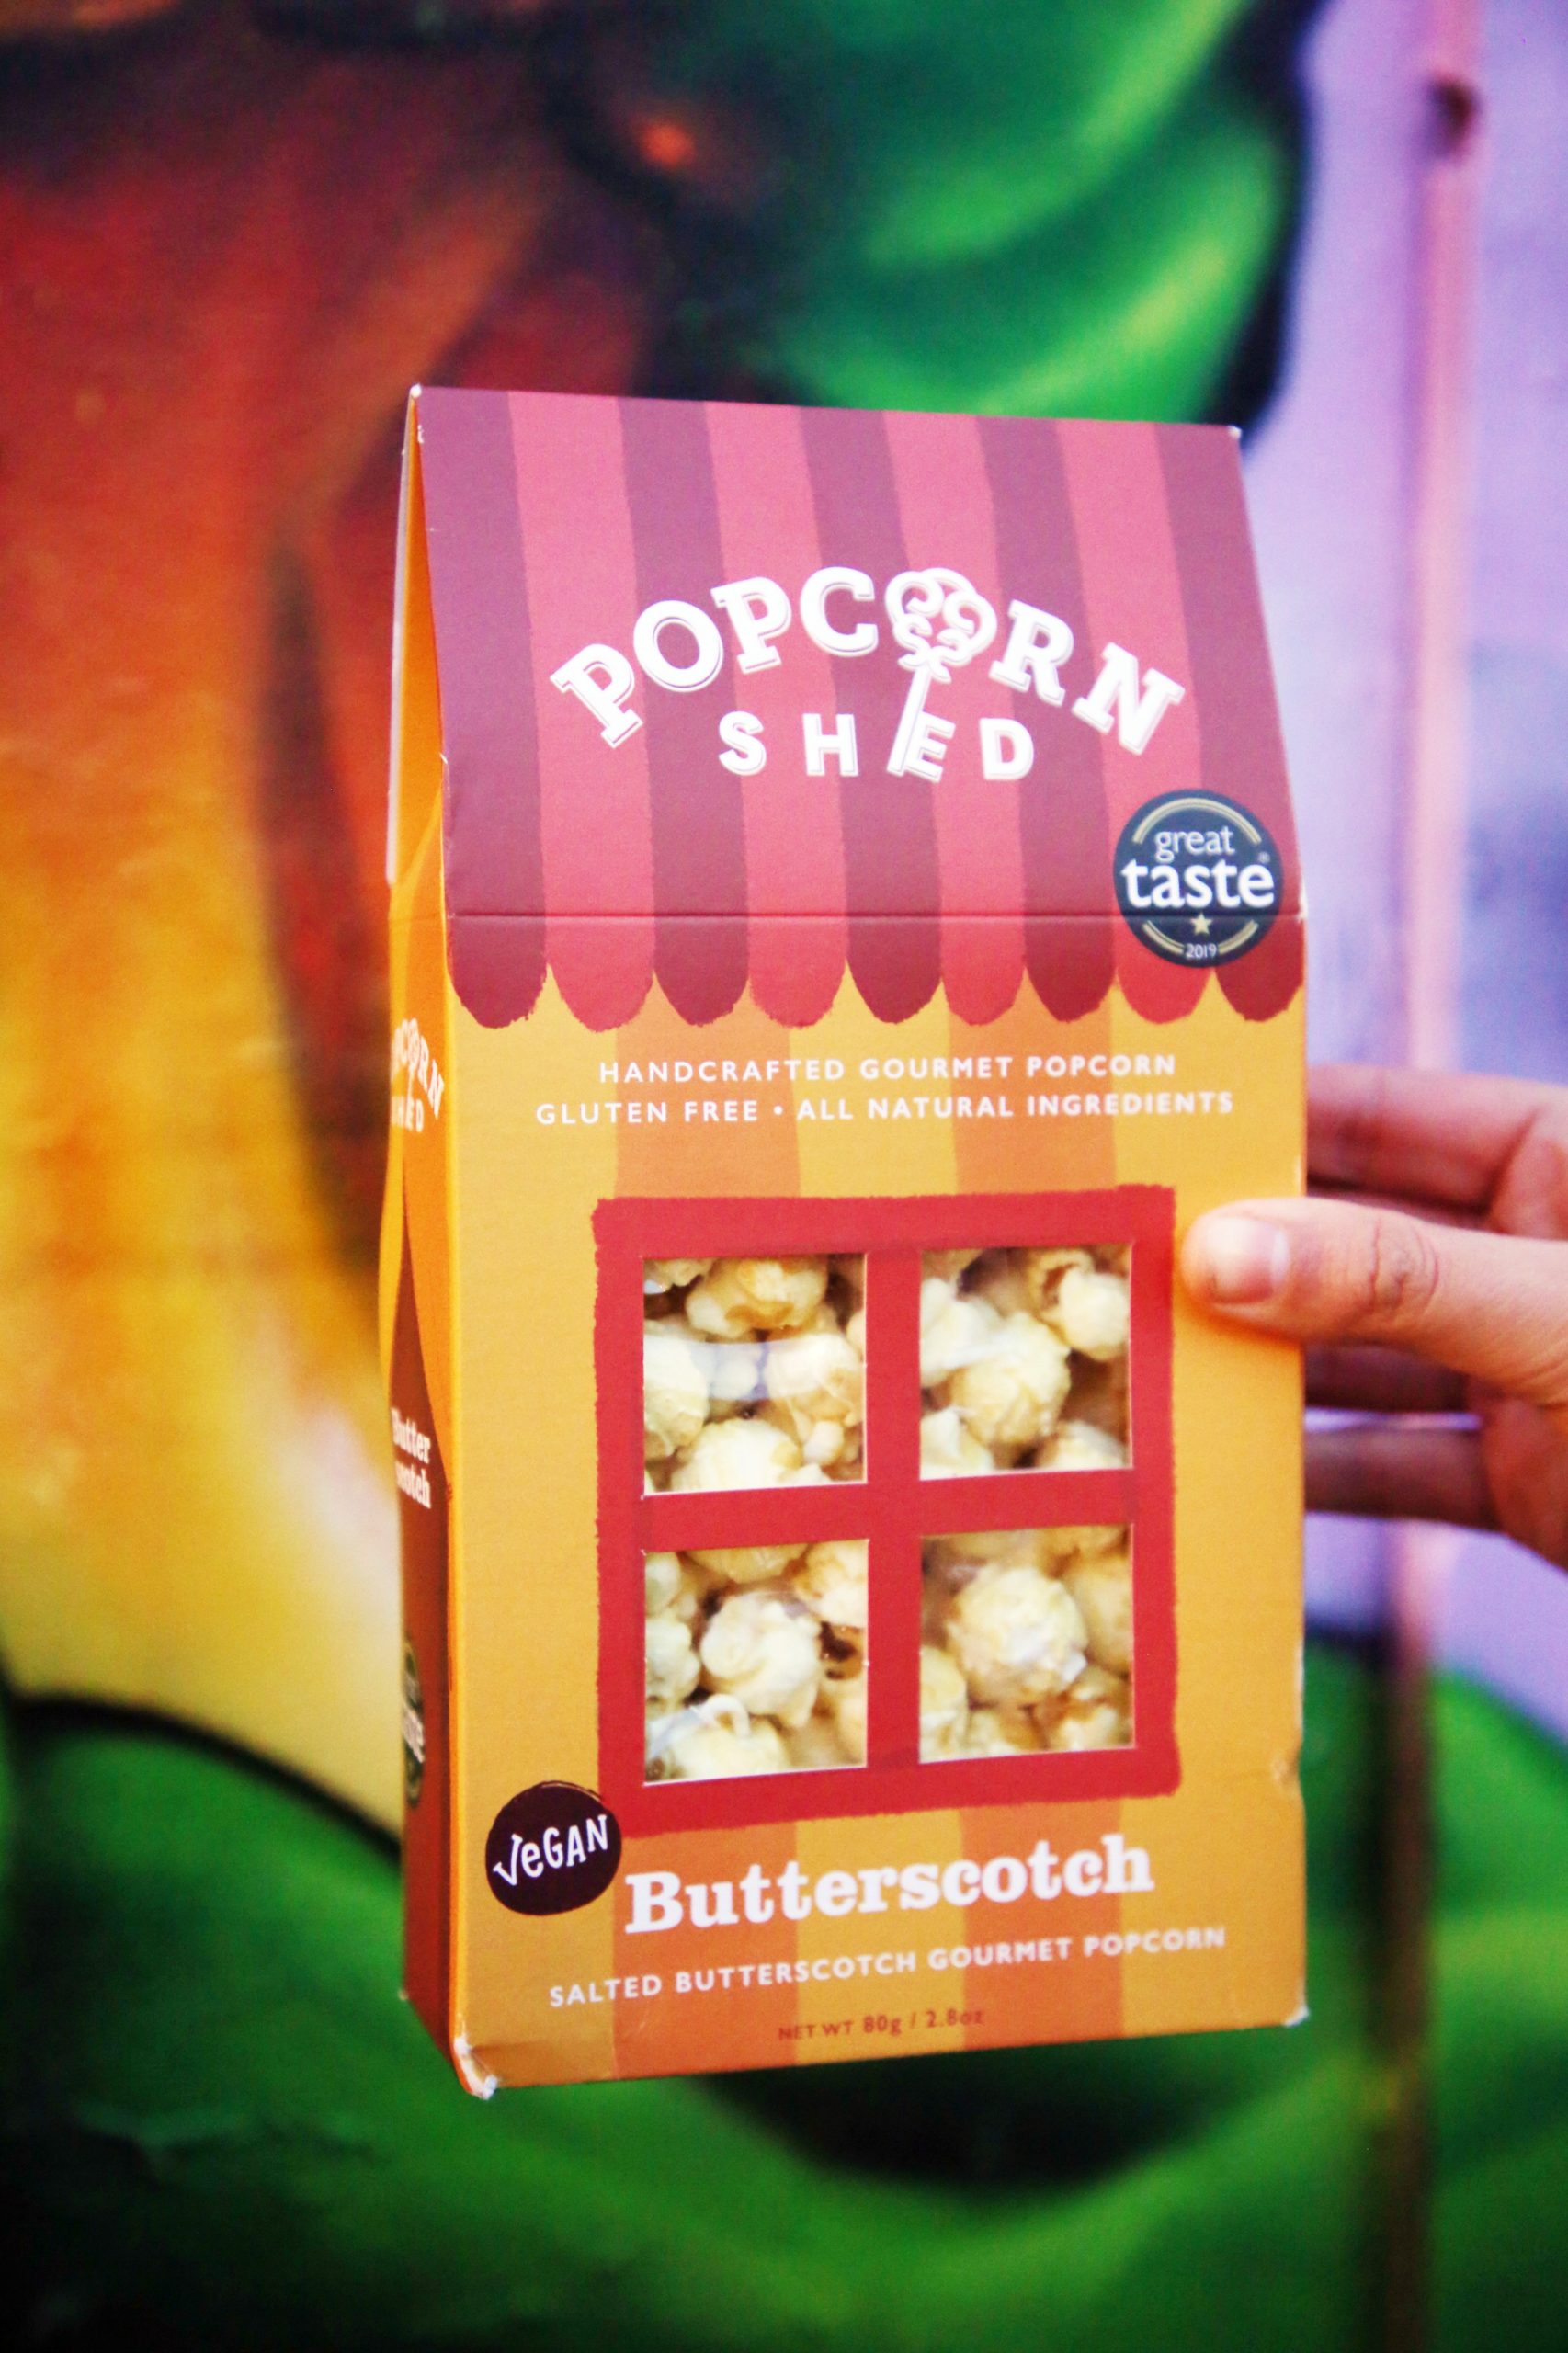 <img src="popcorn.jpg" alt="popcorn shed butterscotch flavour"/> 